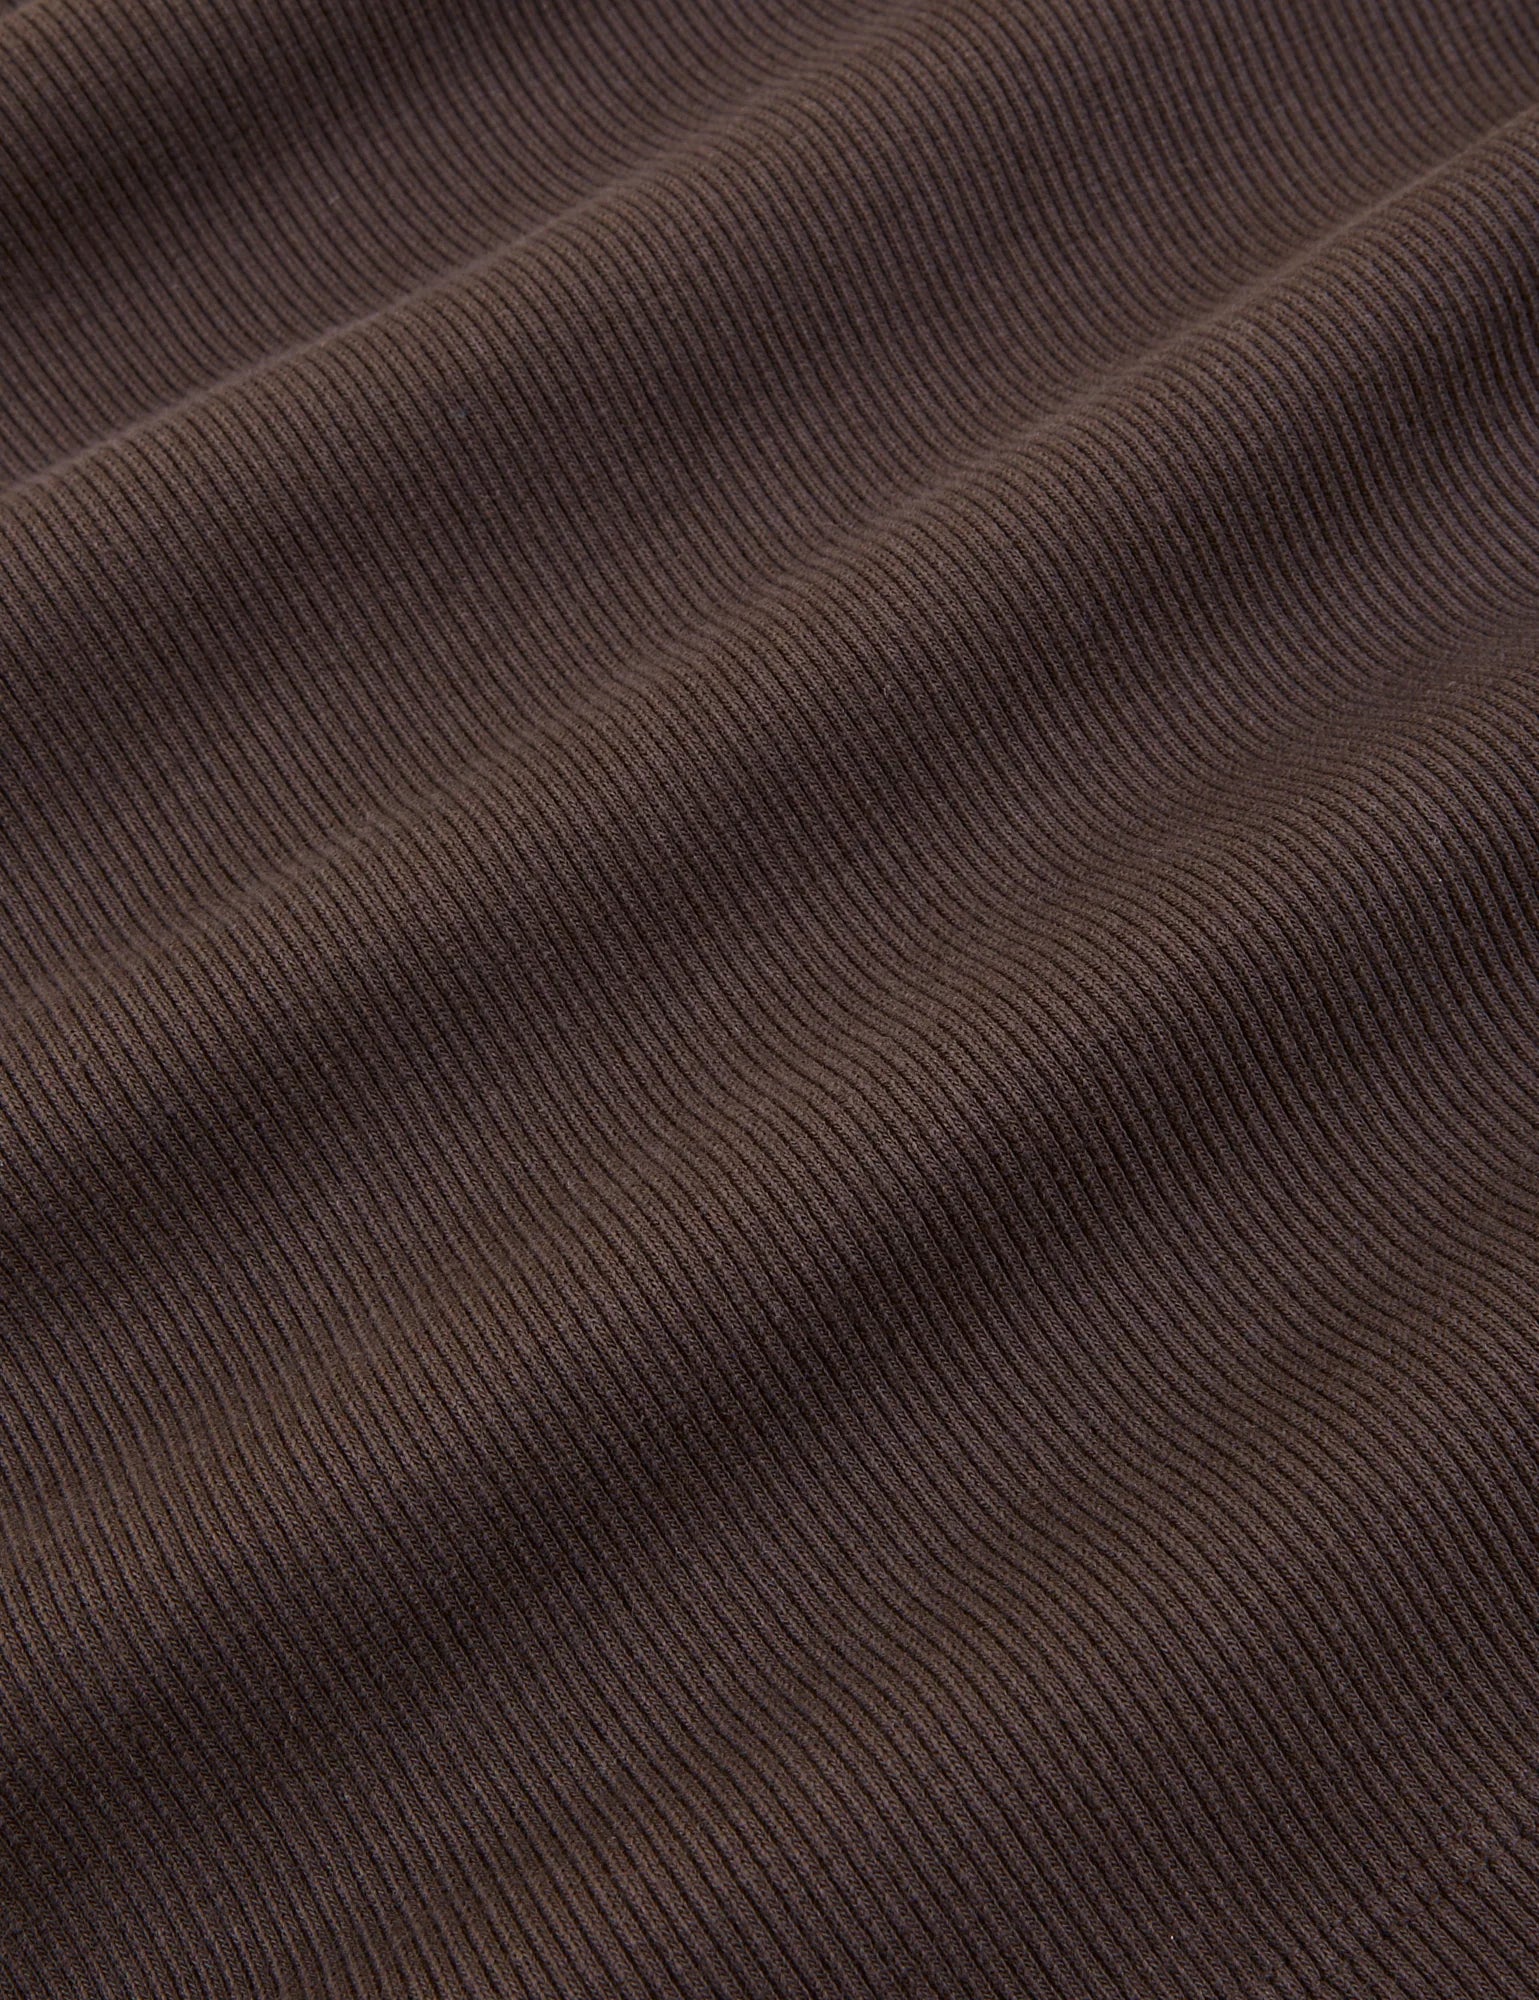 Essential Turtleneck in Espresso Brown fabric detail close up